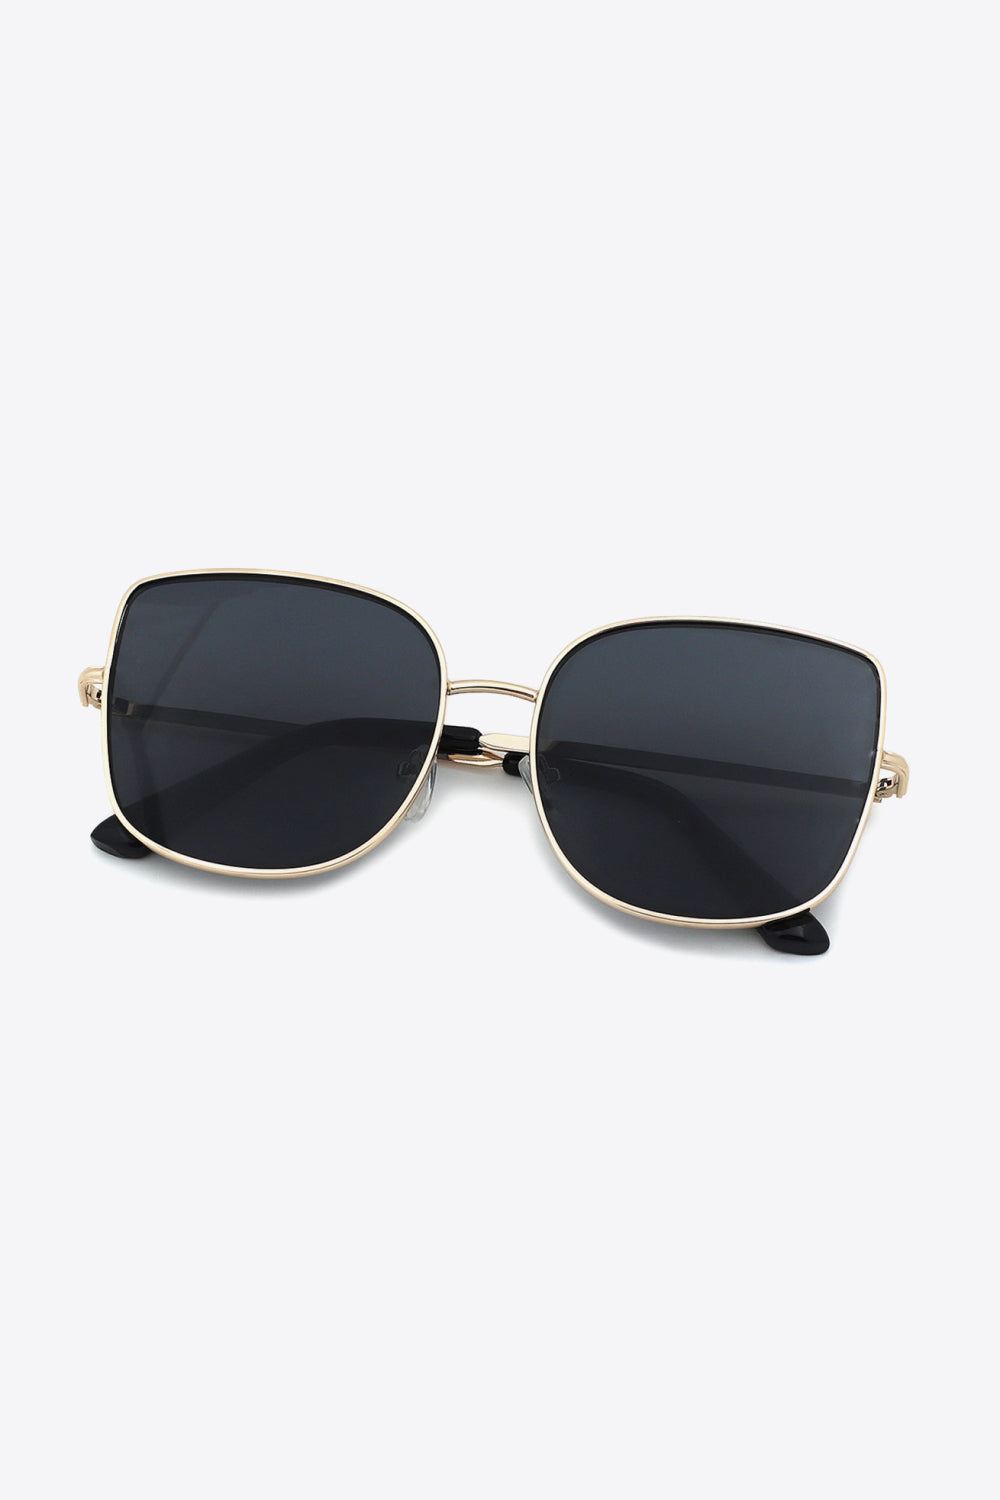 Traci K Collection Metal Frame Wayfarer Sunglasses